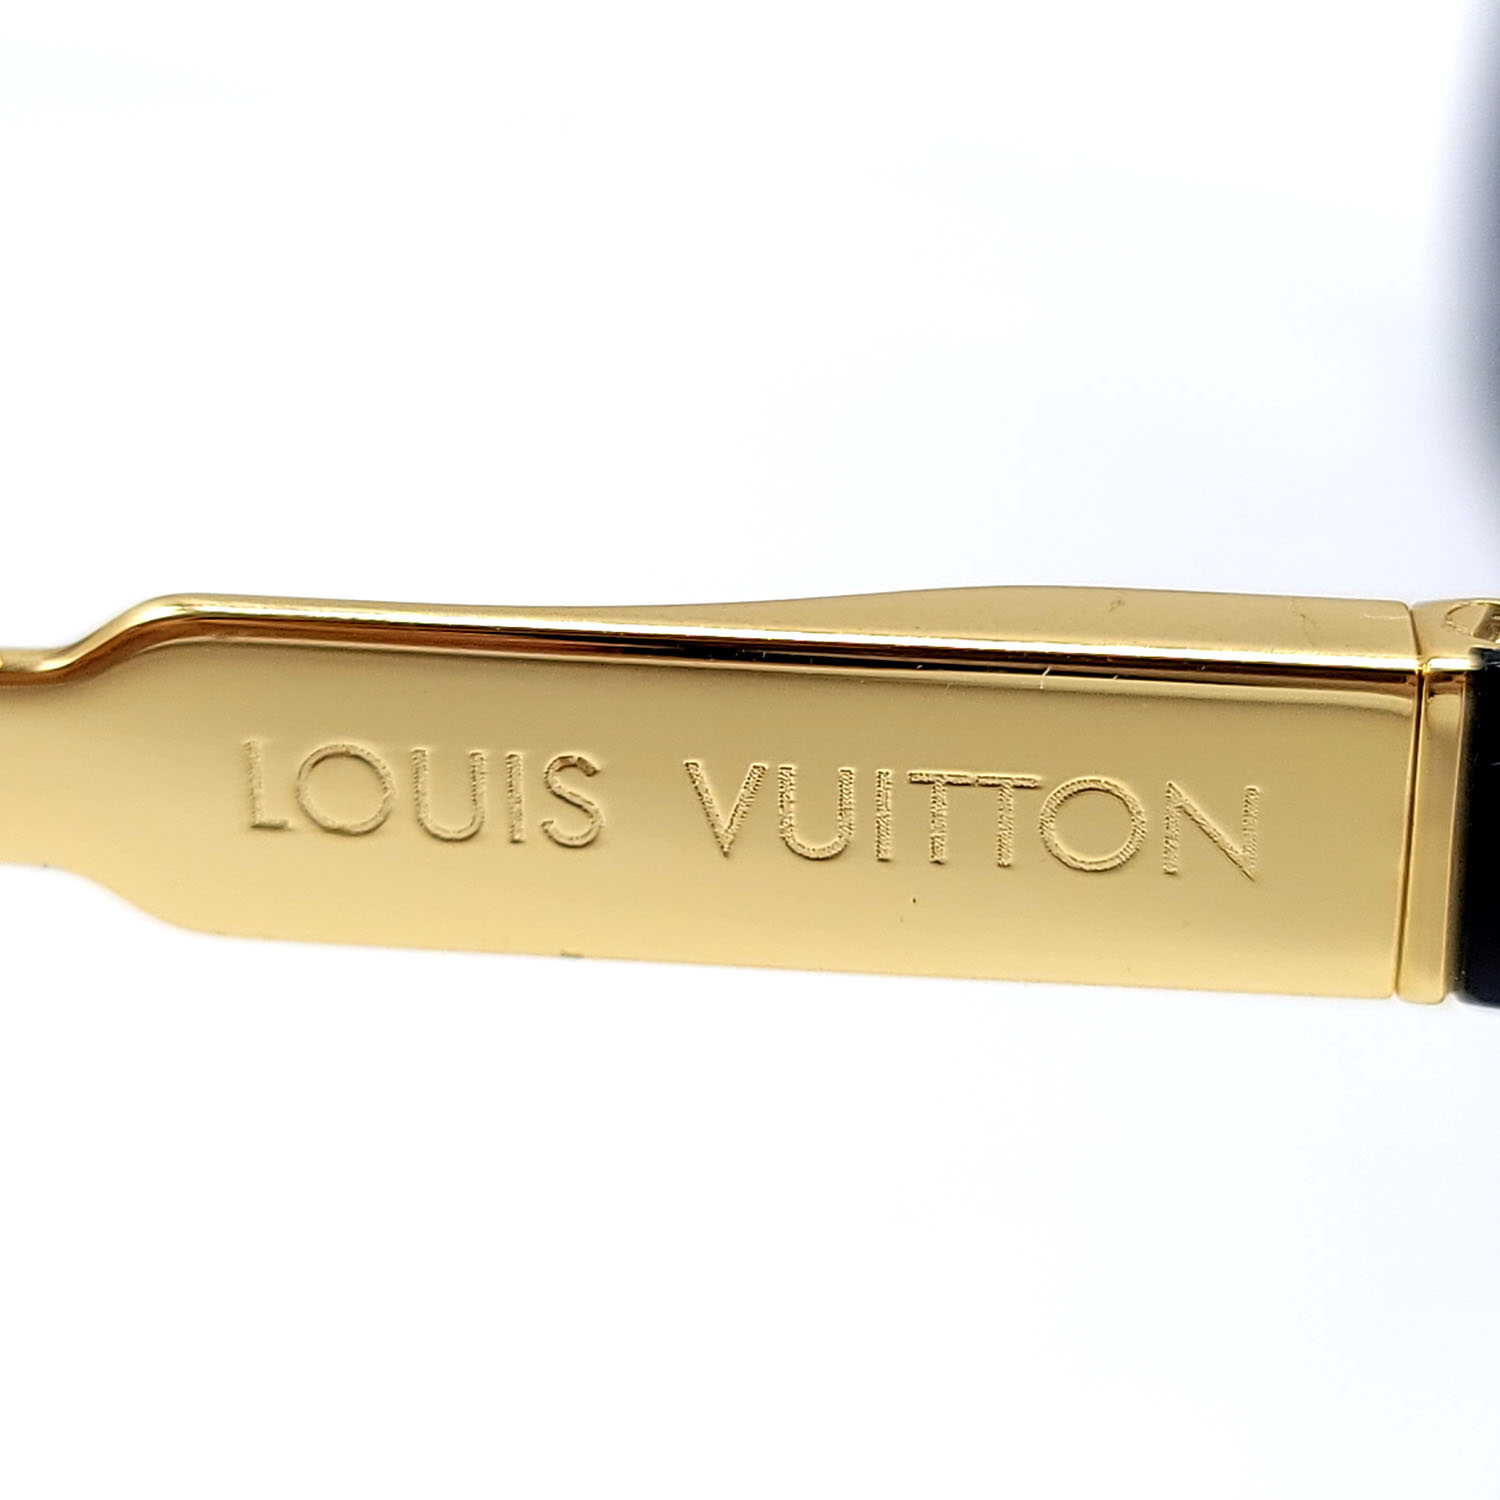 Louis Vuitton Mascot Sunglasses - For Sale on 1stDibs  lv mascot  sunglasses, louis vuitton mascot pilot sunglasses, louis vuitton mascot  sunglasses black